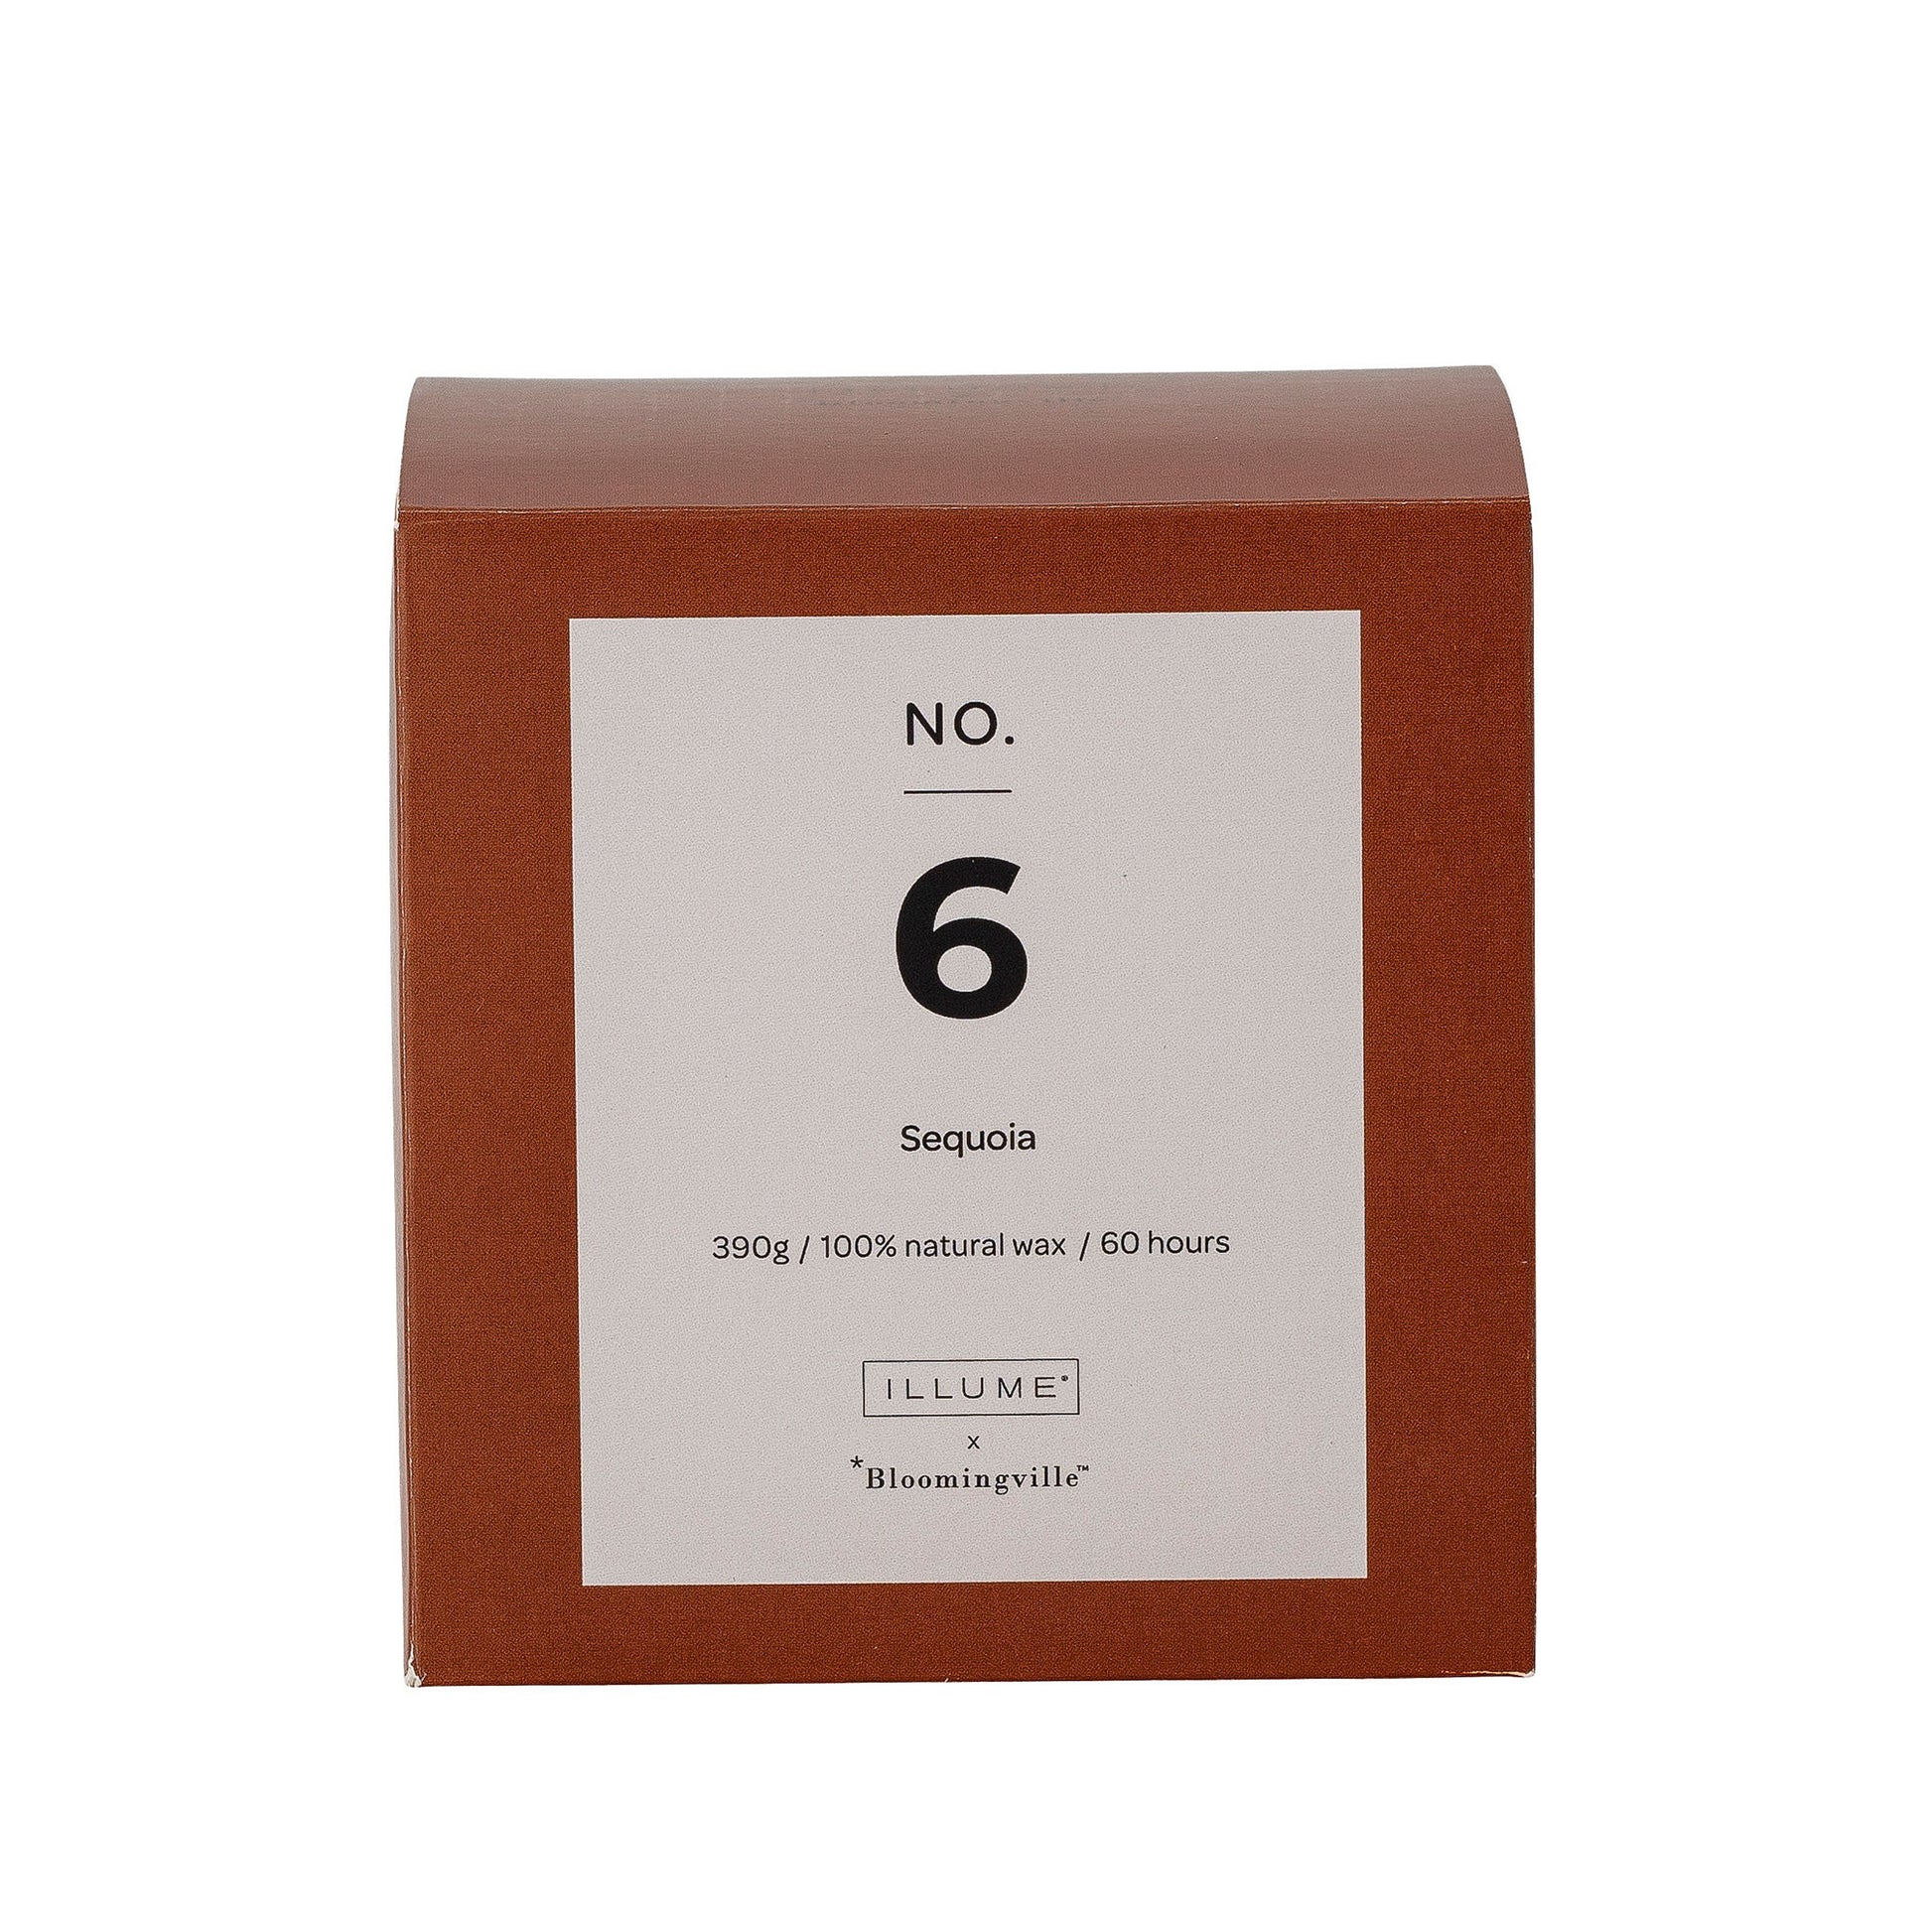 Bougie parfumée Illume X Bloomingville NO. 6 - Sequoia , Marron, Cire naturelle